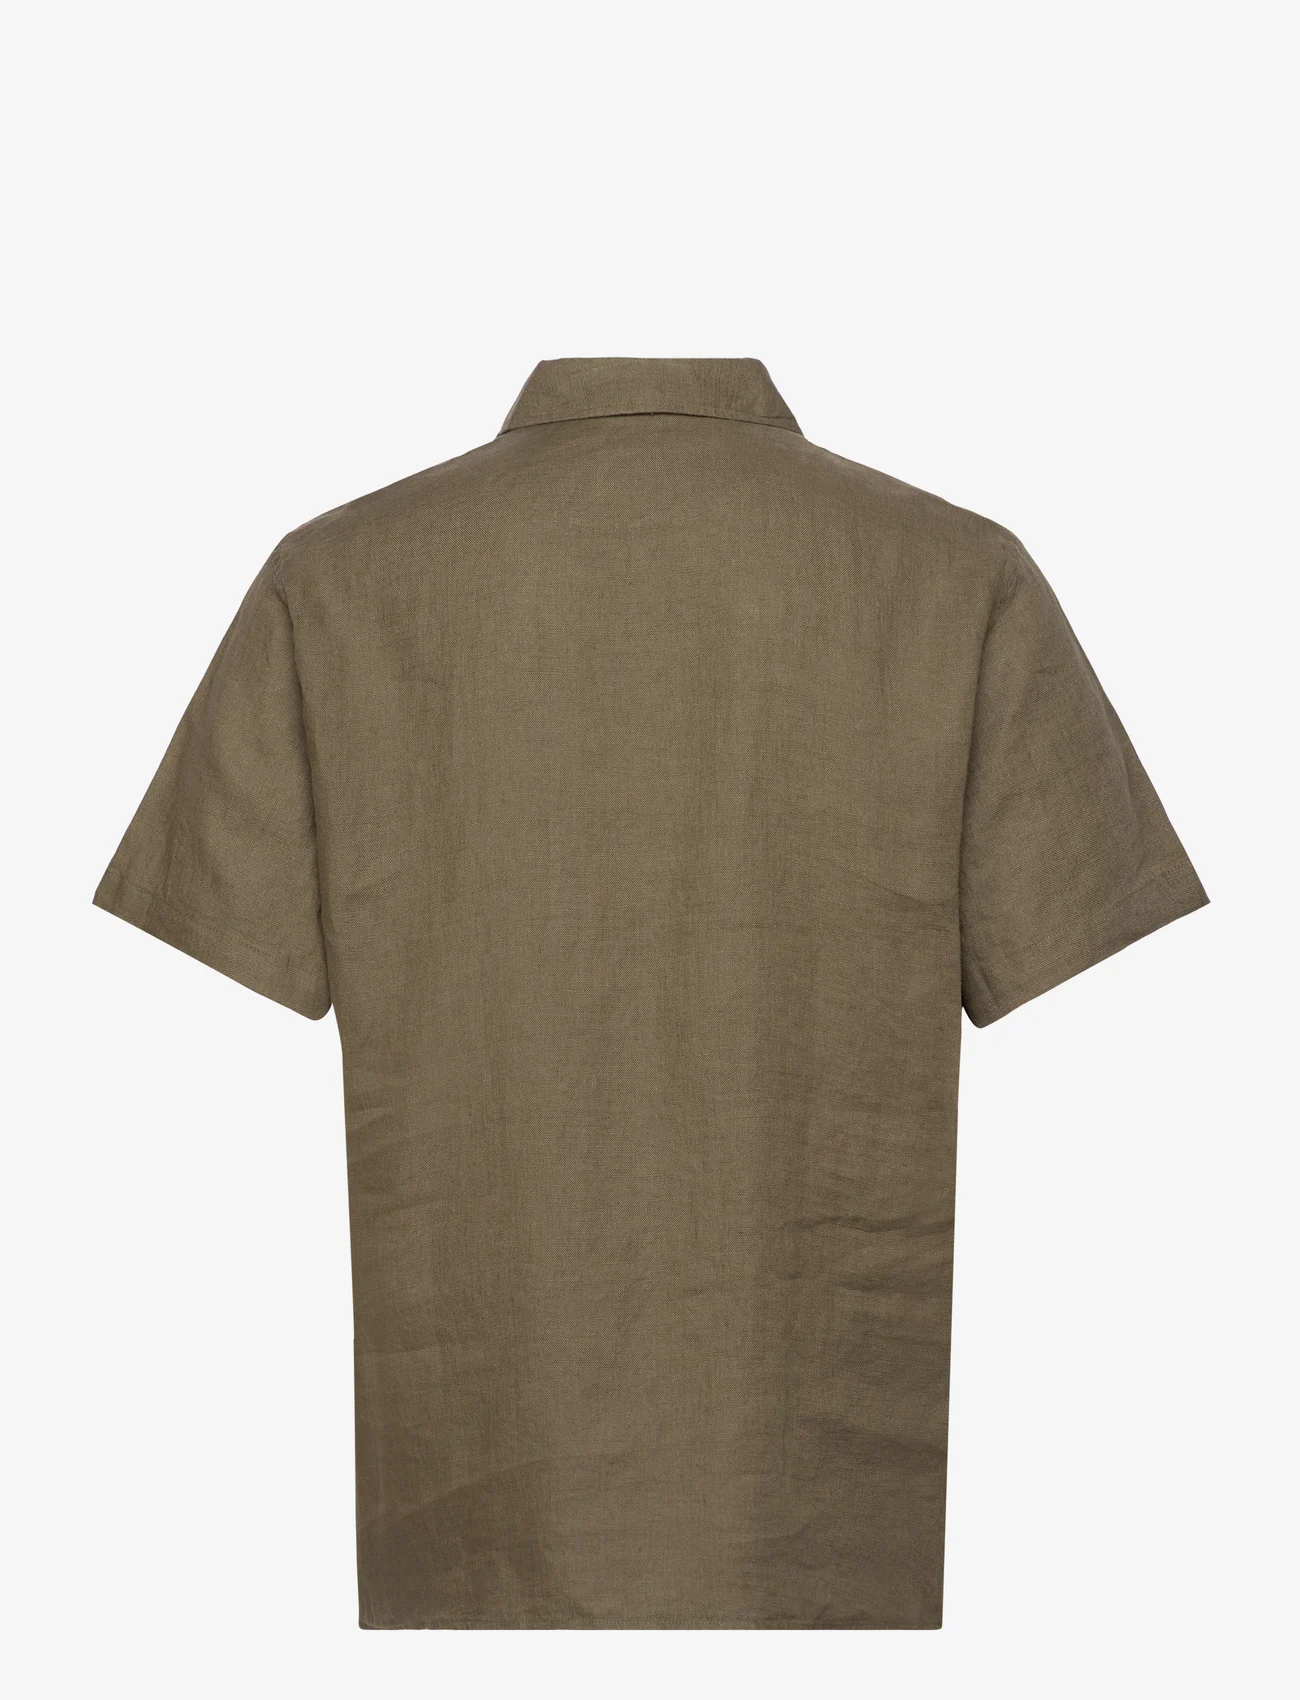 Woodbird - Sunny Linen Shirt - basic skjortor - khaki - 1